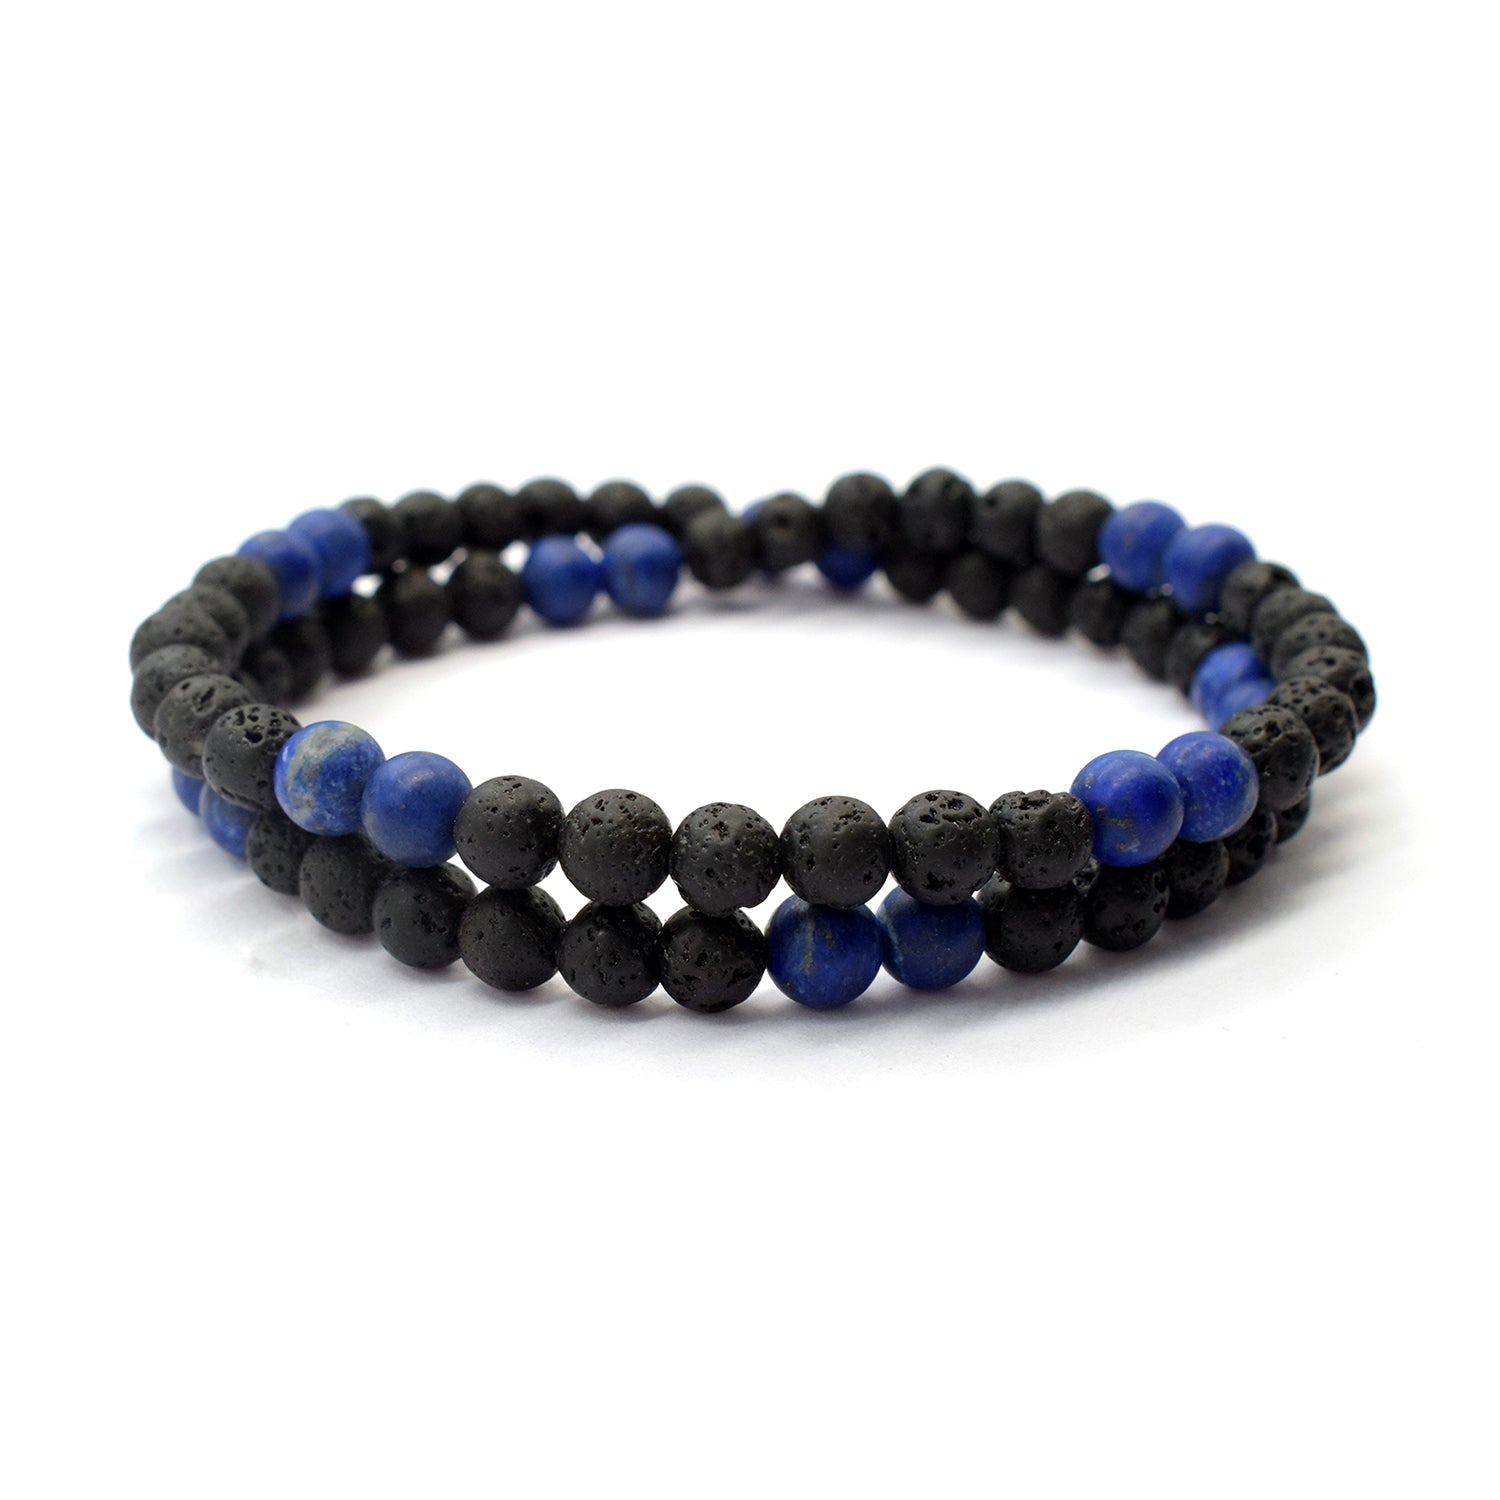 Two Layer Wrap Bracelet in Lapis Lazuli, Lava Gemstone Beads